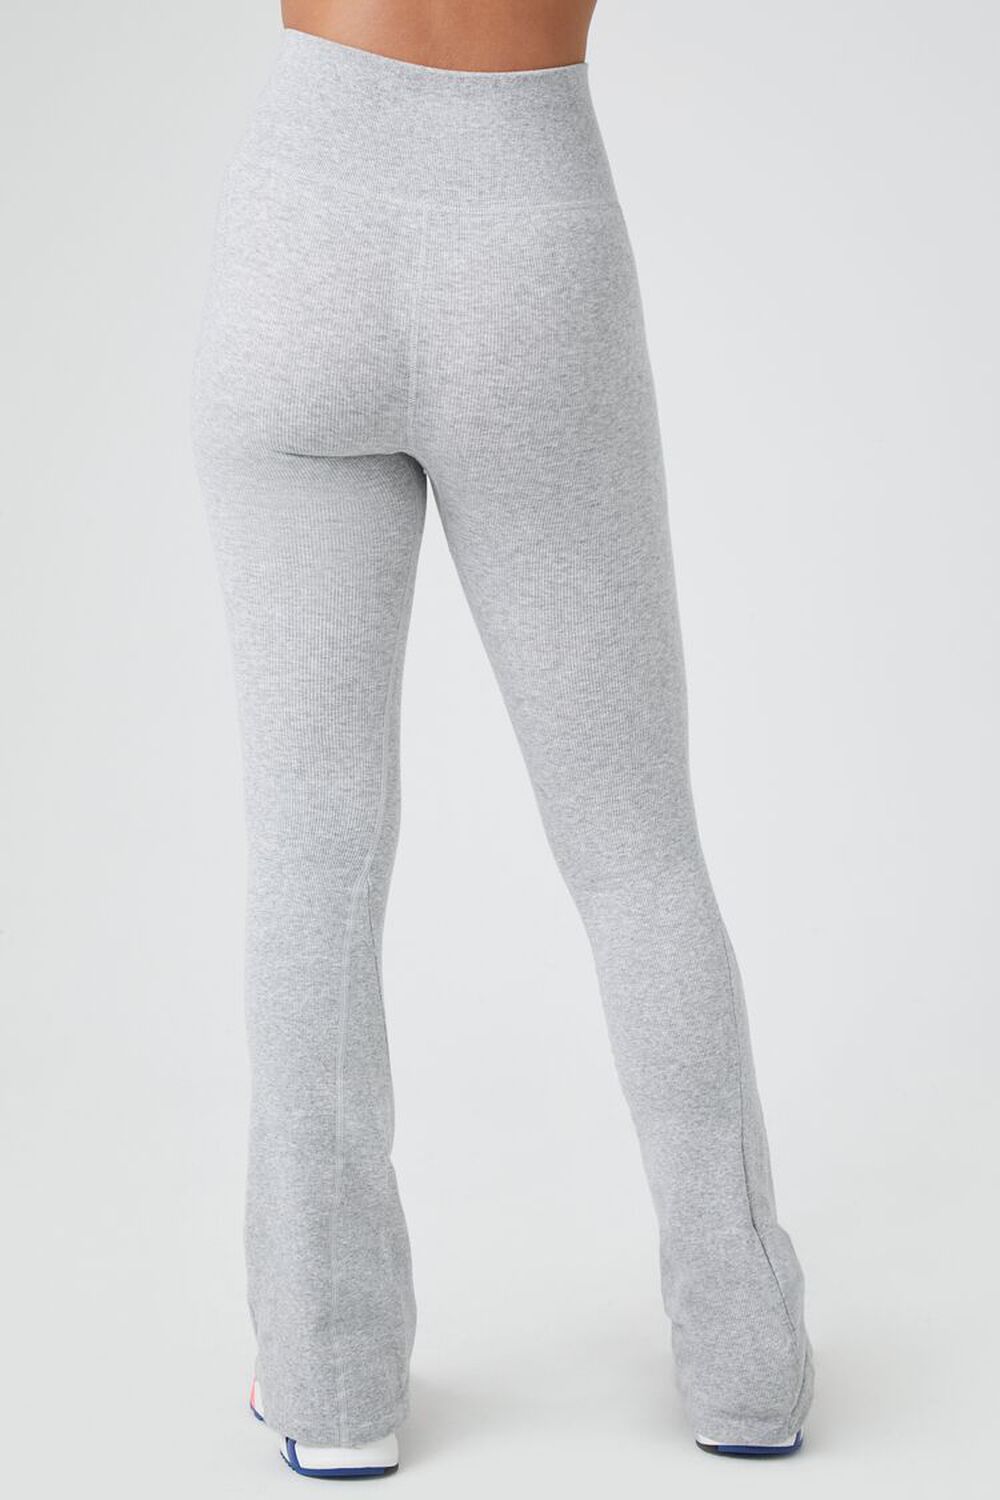 American Apparel Cotton Spandex Jersey High-Waist Leggings- Heather Gray,  MEDIUM